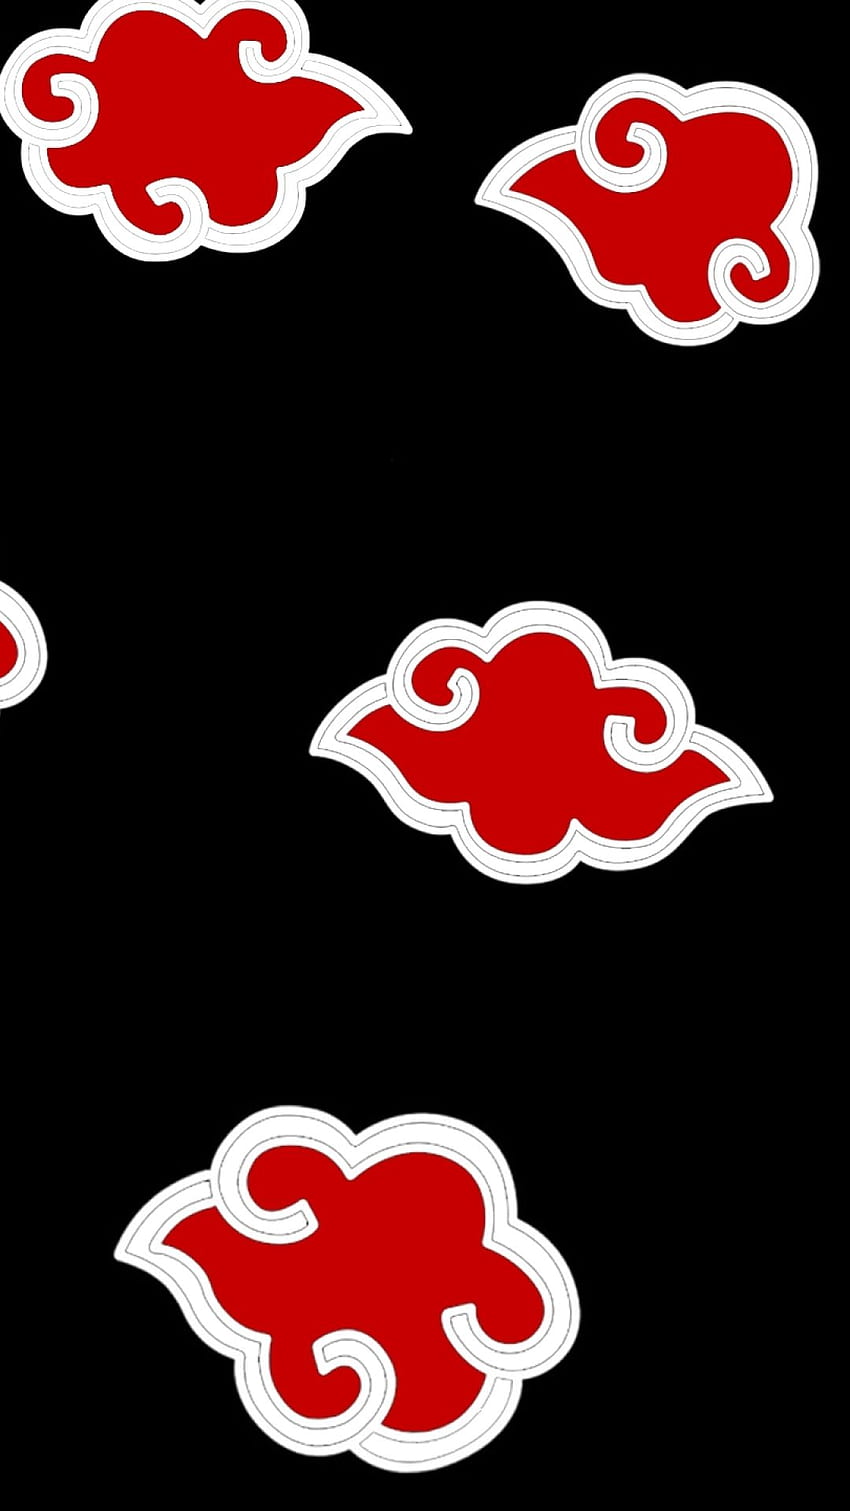 Anime Naruto Akatsuki Necklace Red Cloud Symbol Pendant Cosplay Jewelry  Gift | eBay